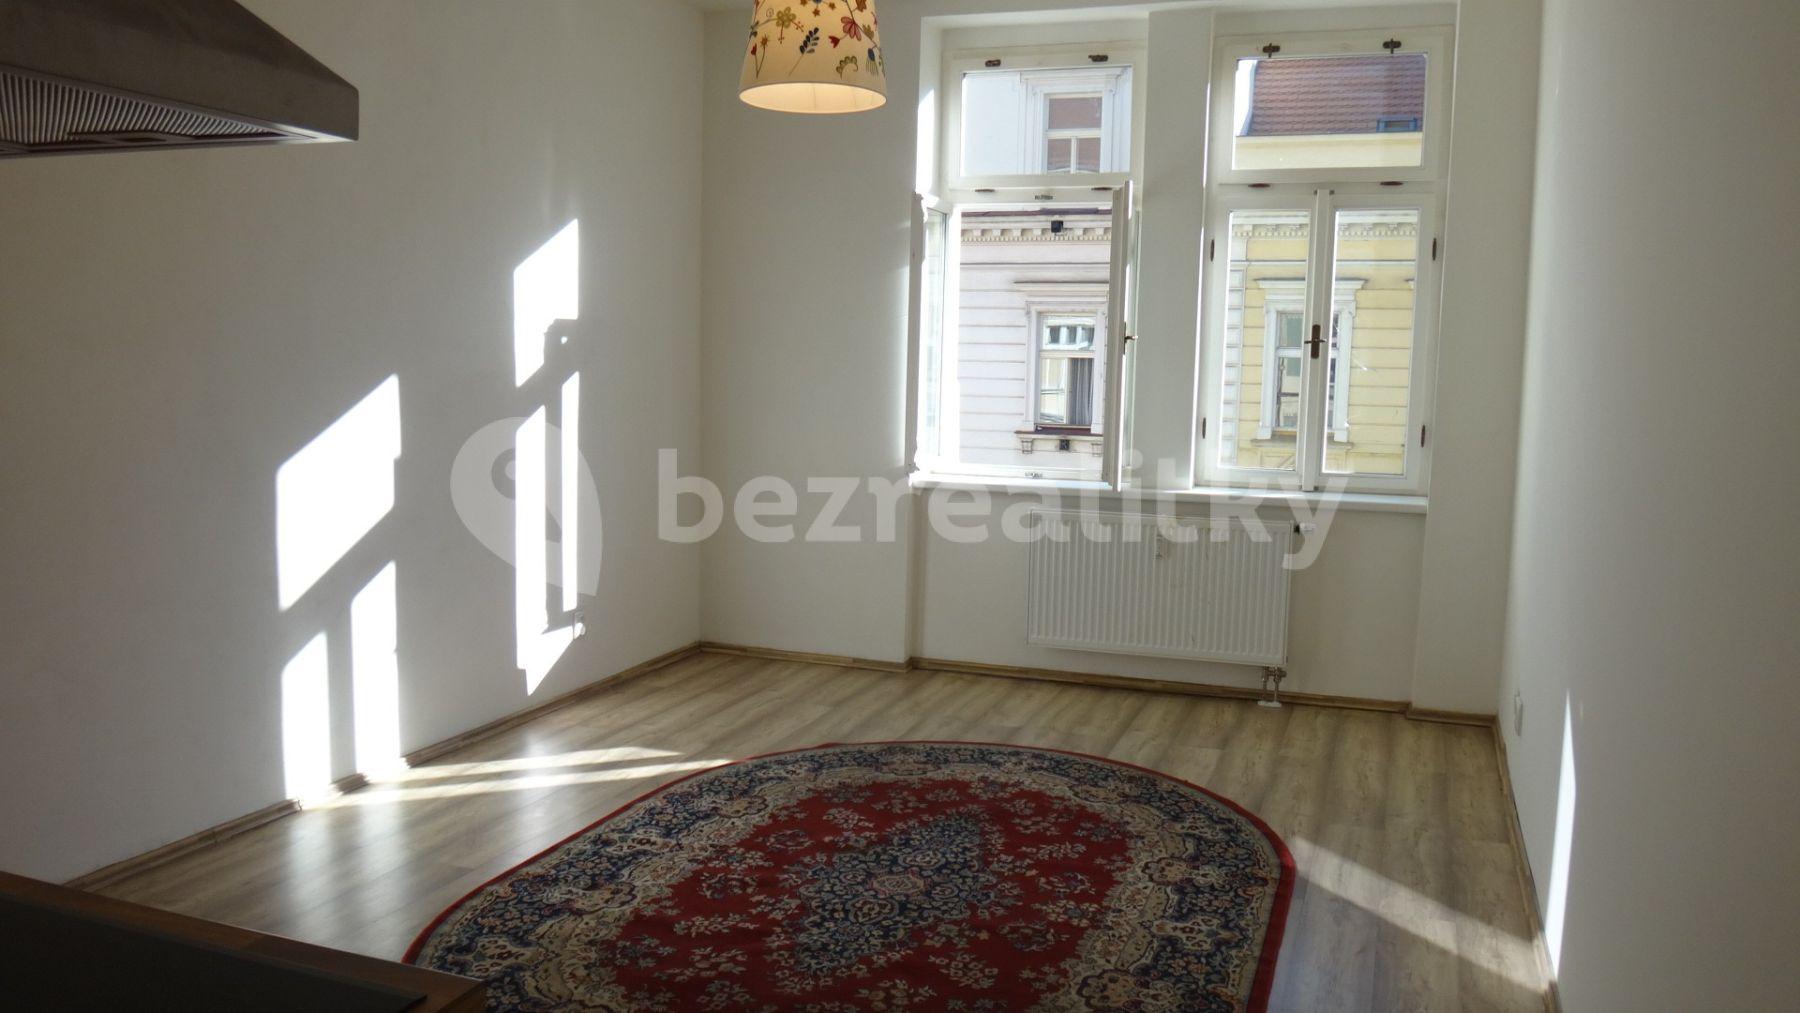 1 bedroom with open-plan kitchen flat to rent, 55 m², Čestmírova, Prague, Prague